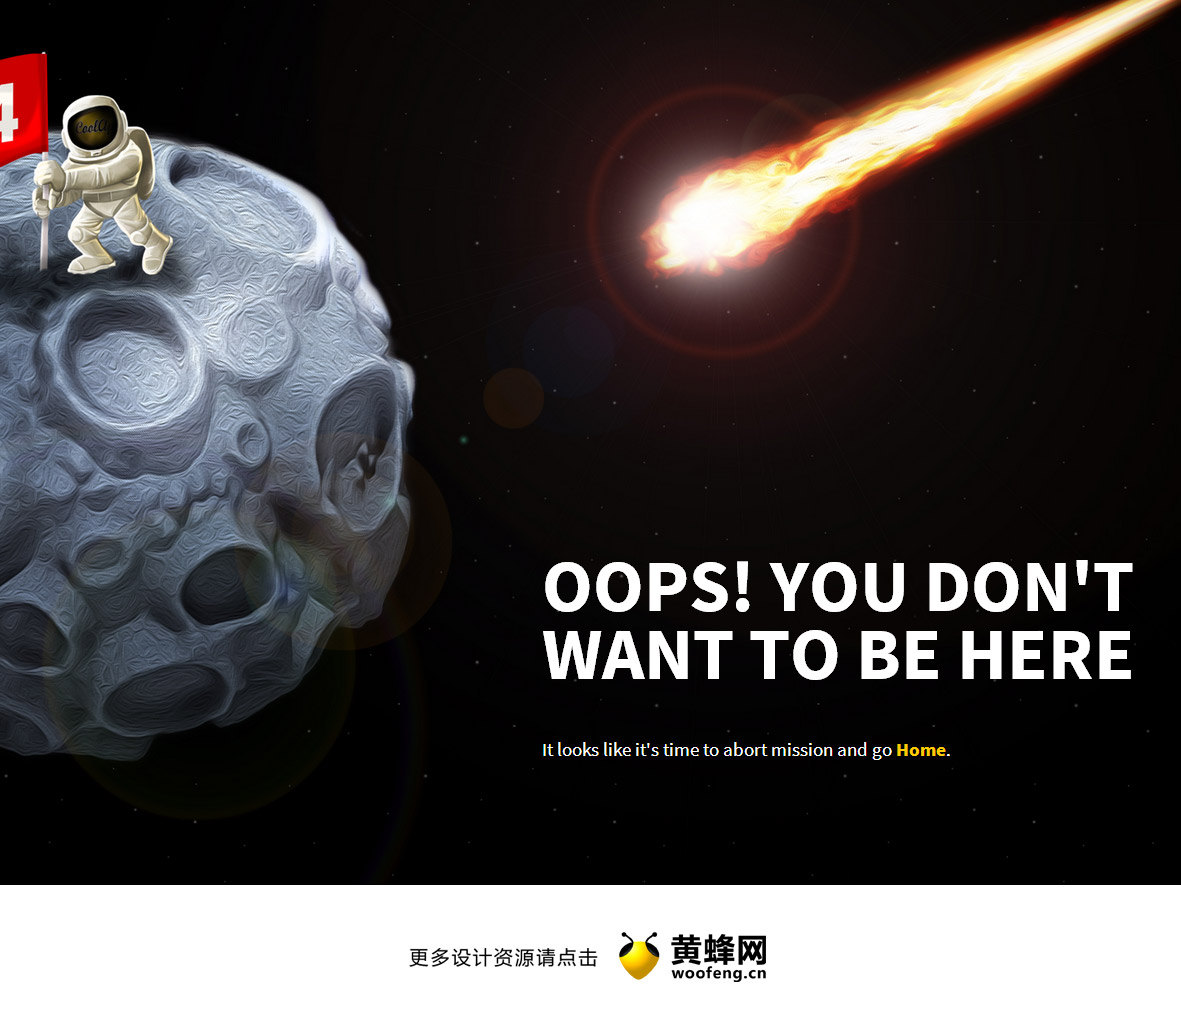 CoolApps 404创意页面设计，来源自黄蜂网https://woofeng.cn/